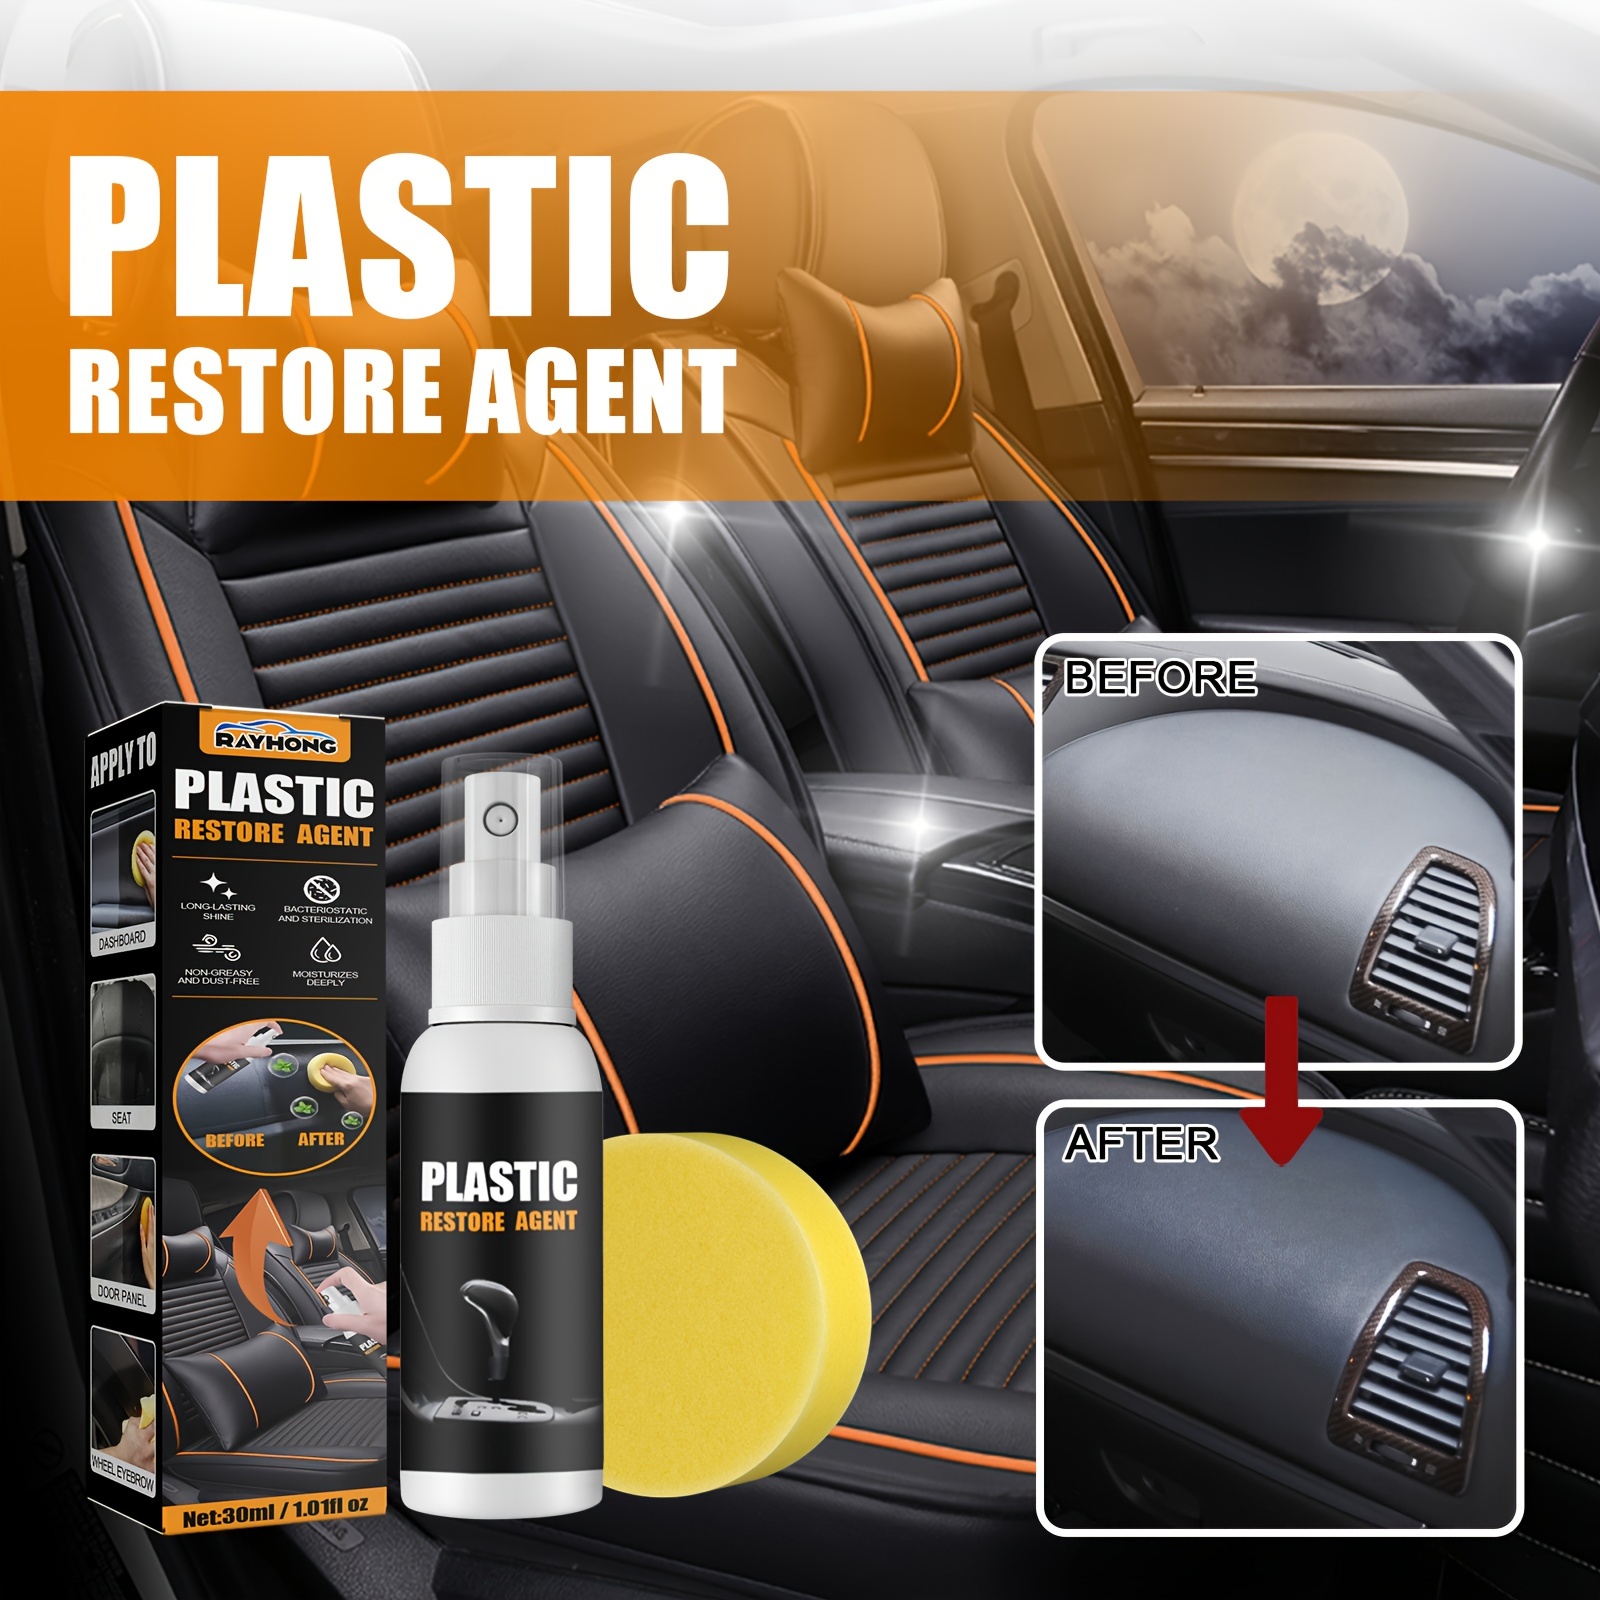 Ouhoe Plastic Revitalizing Coating Agent, Nano Plastic Refreshing Coating,  Plastic Refreshing ,Plastic Parts Refurbish Agent for Car, Car Restorer